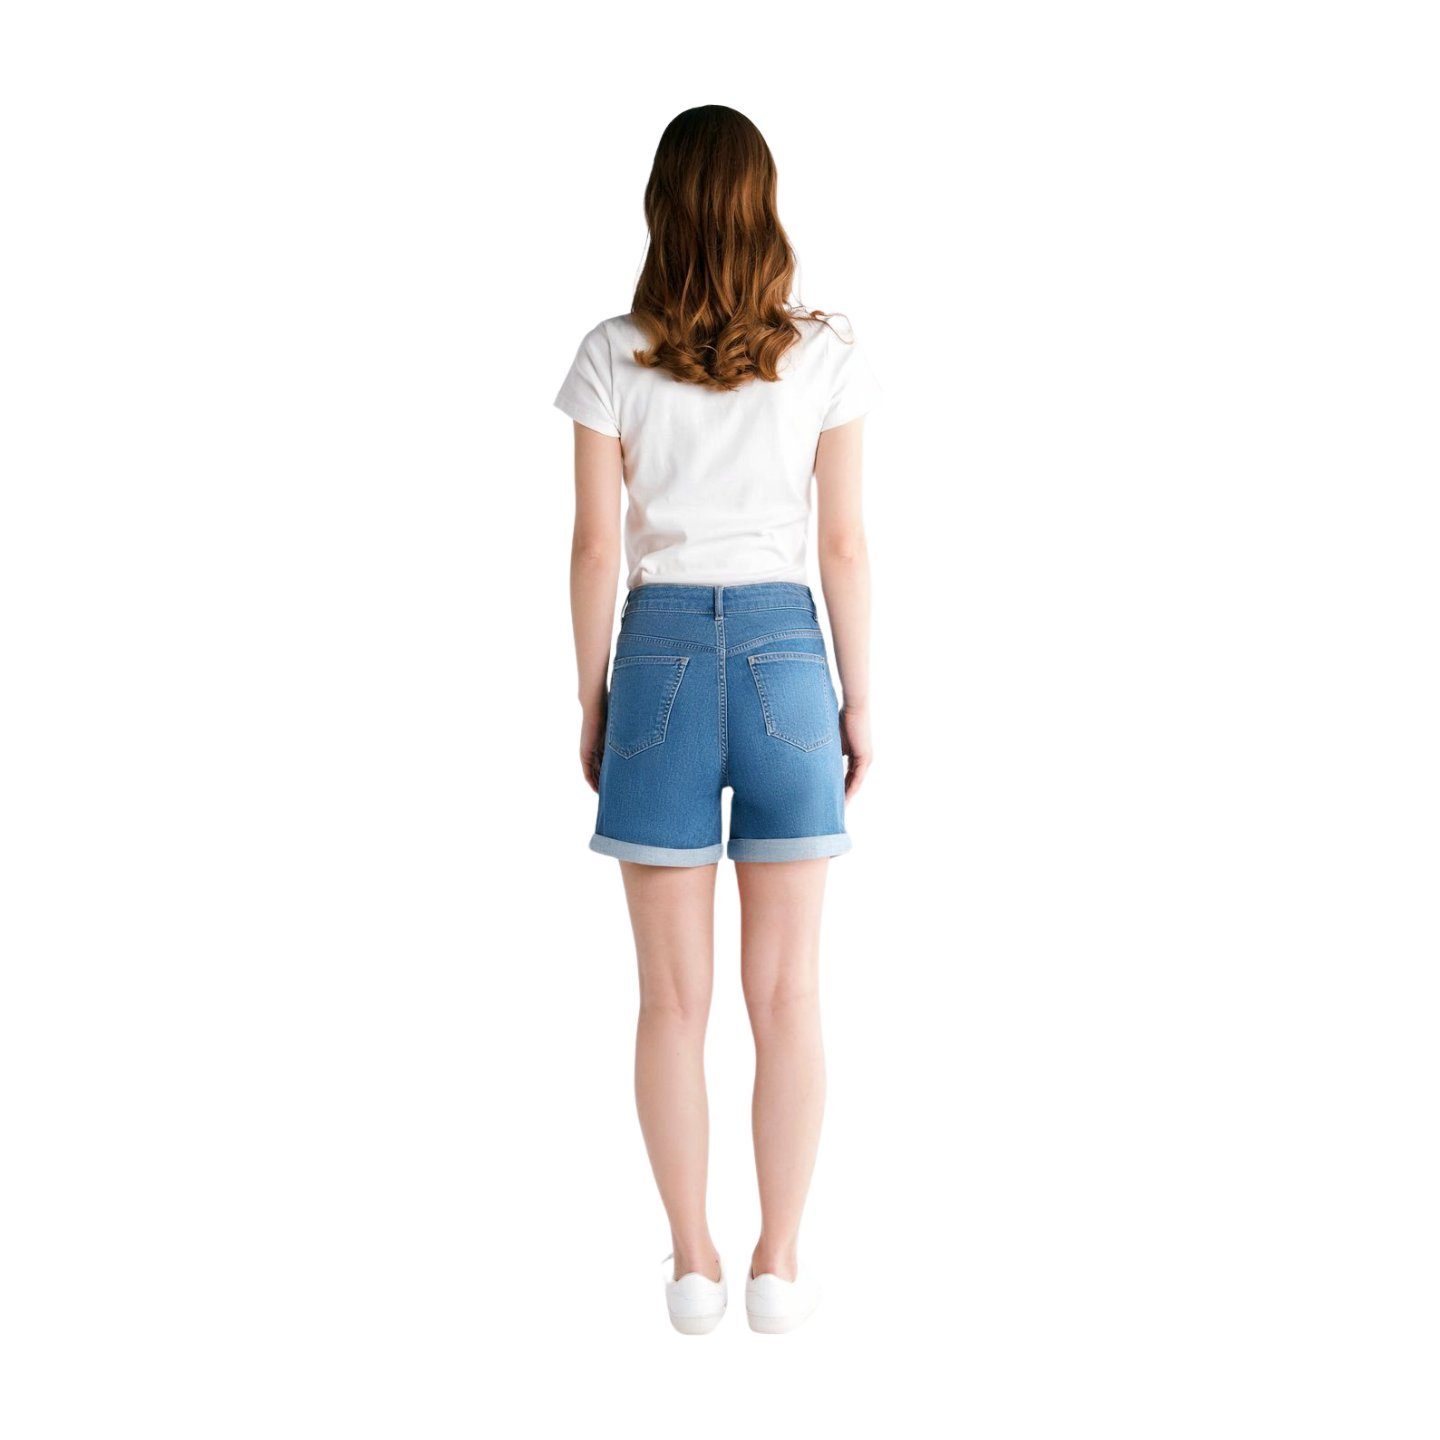 Evermind Jeansshorts Women's Mom Shorts